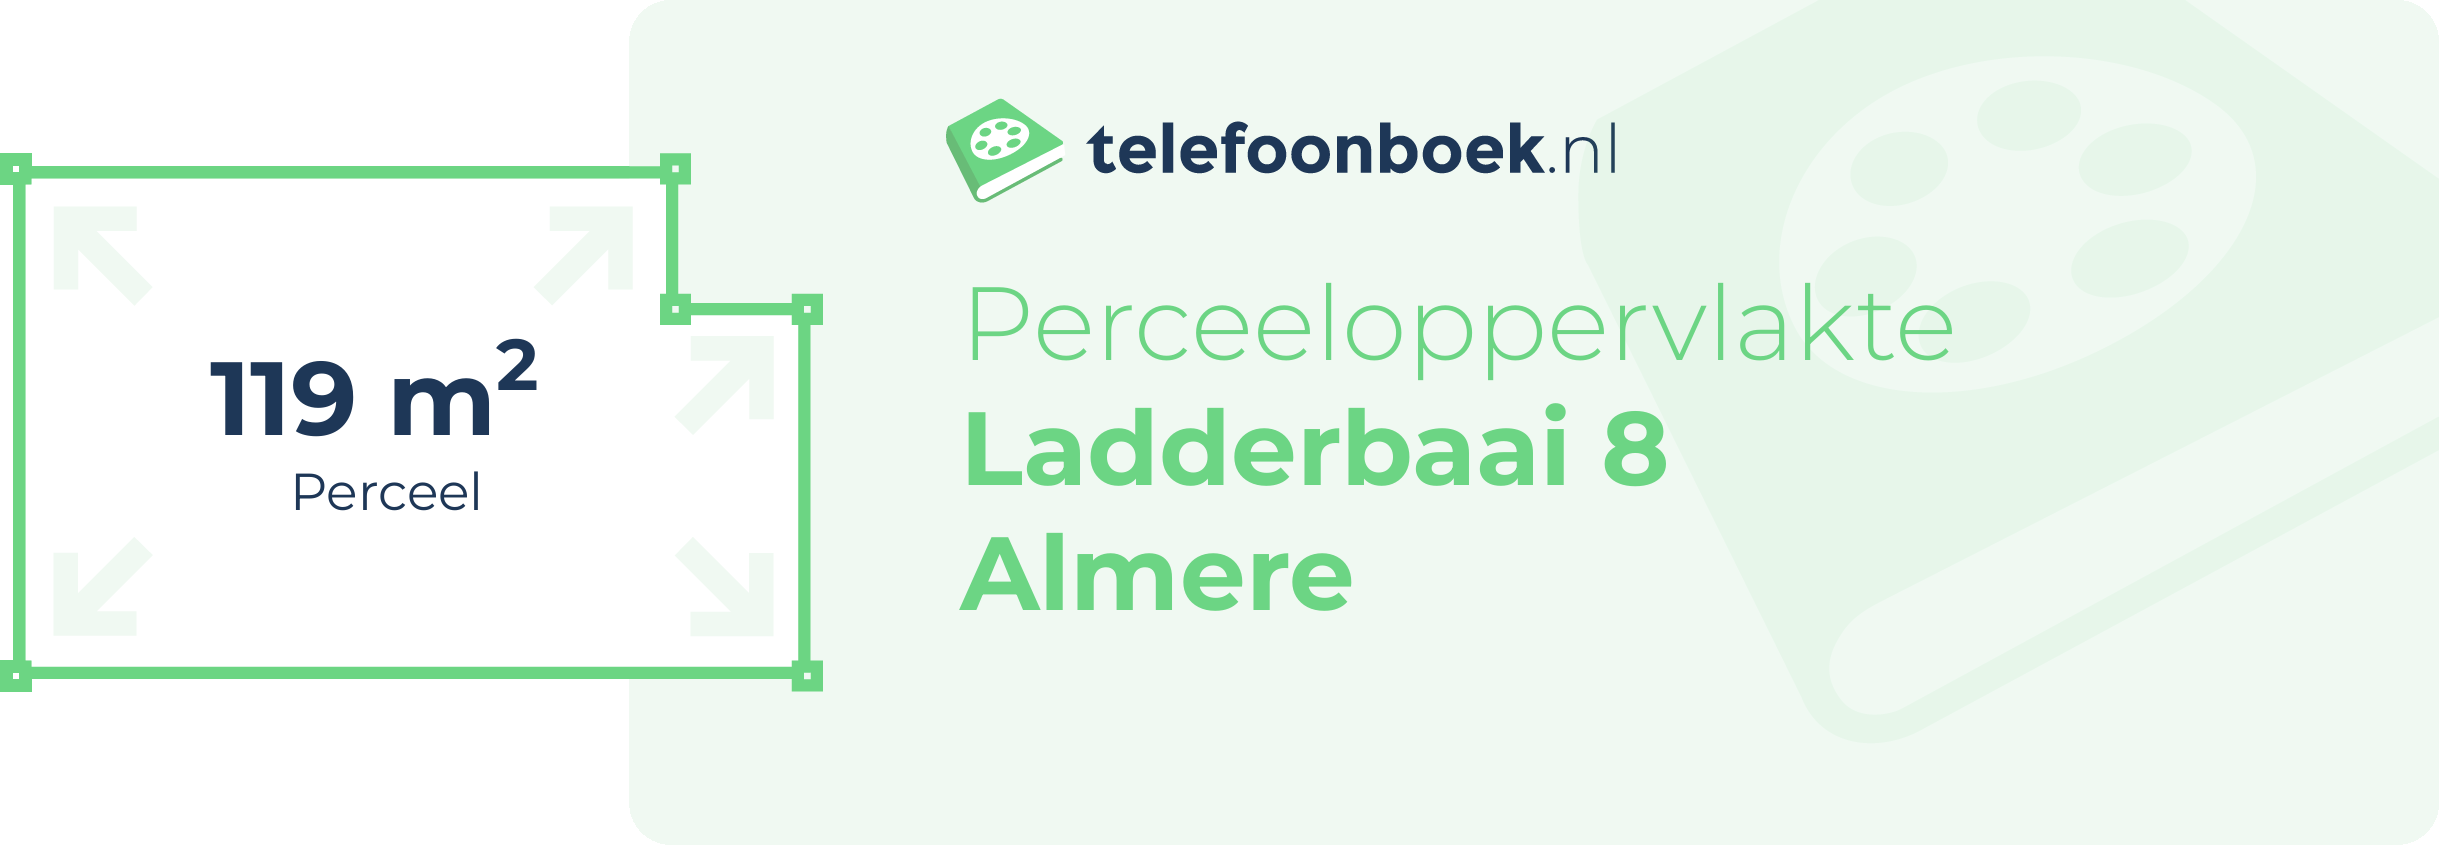 Perceeloppervlakte Ladderbaai 8 Almere